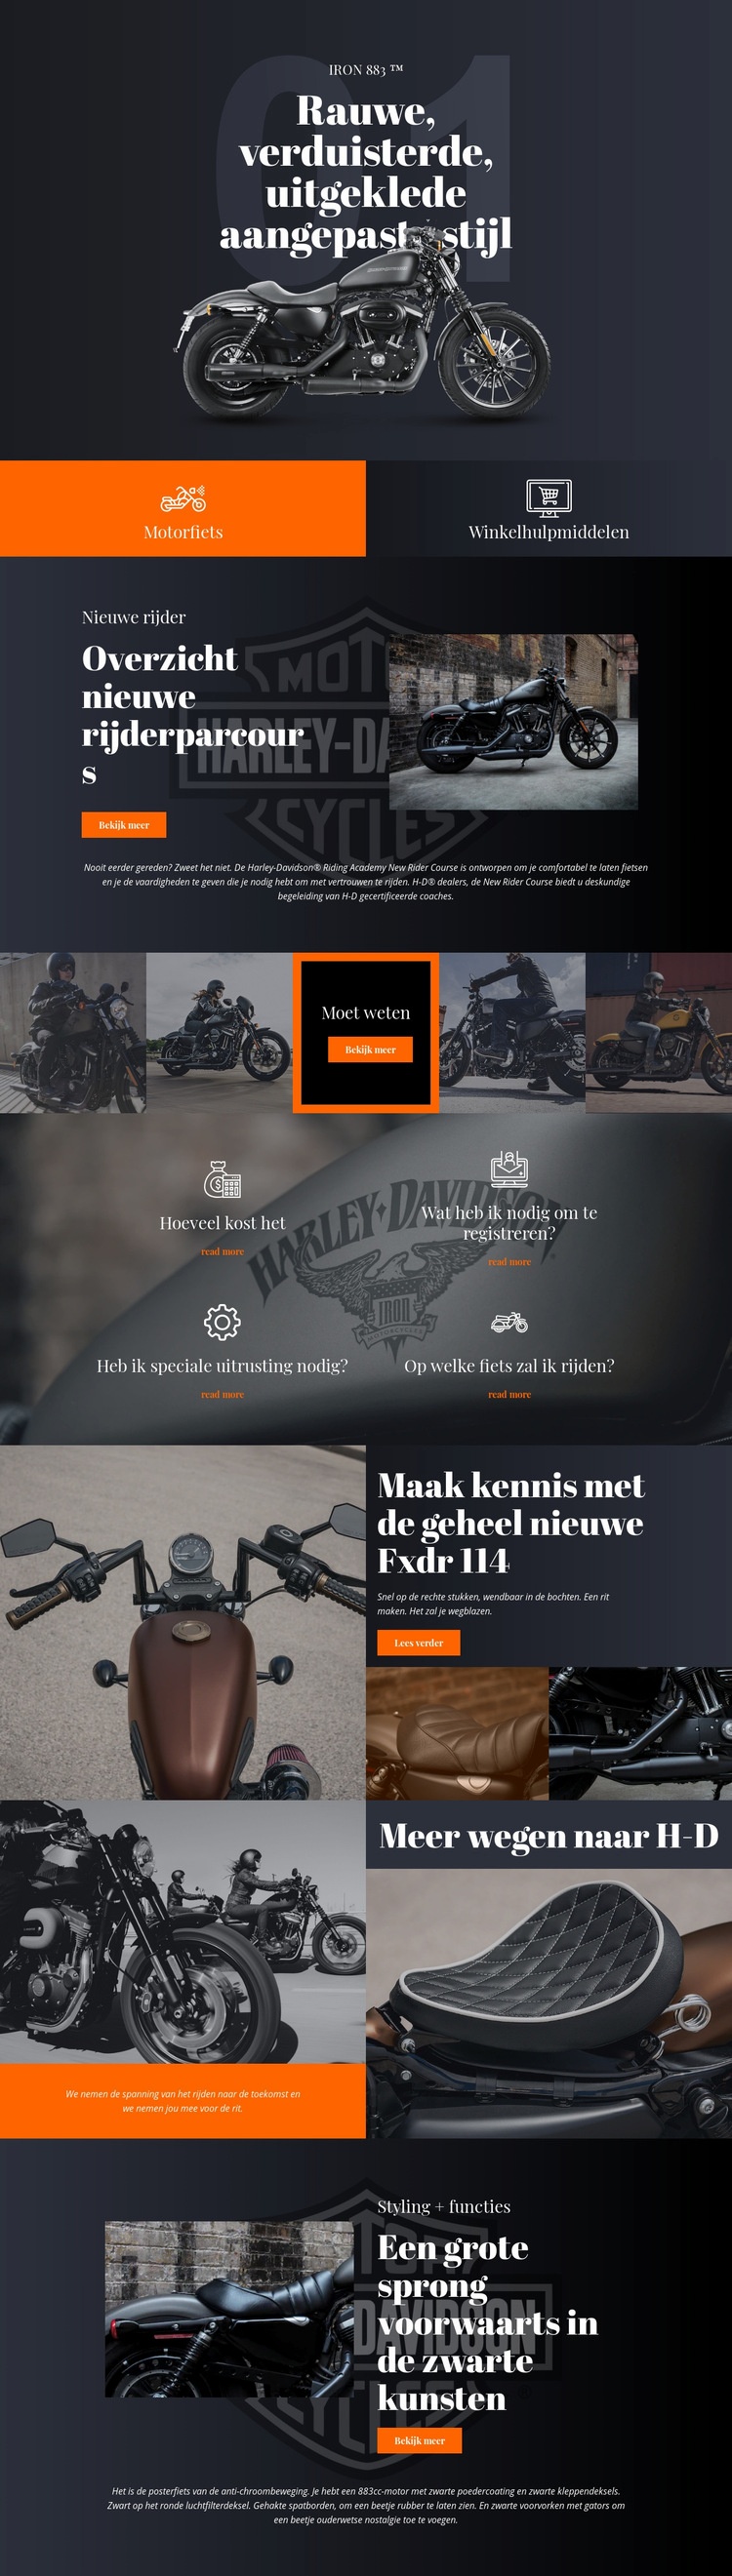 Harley Davidson HTML5-sjabloon